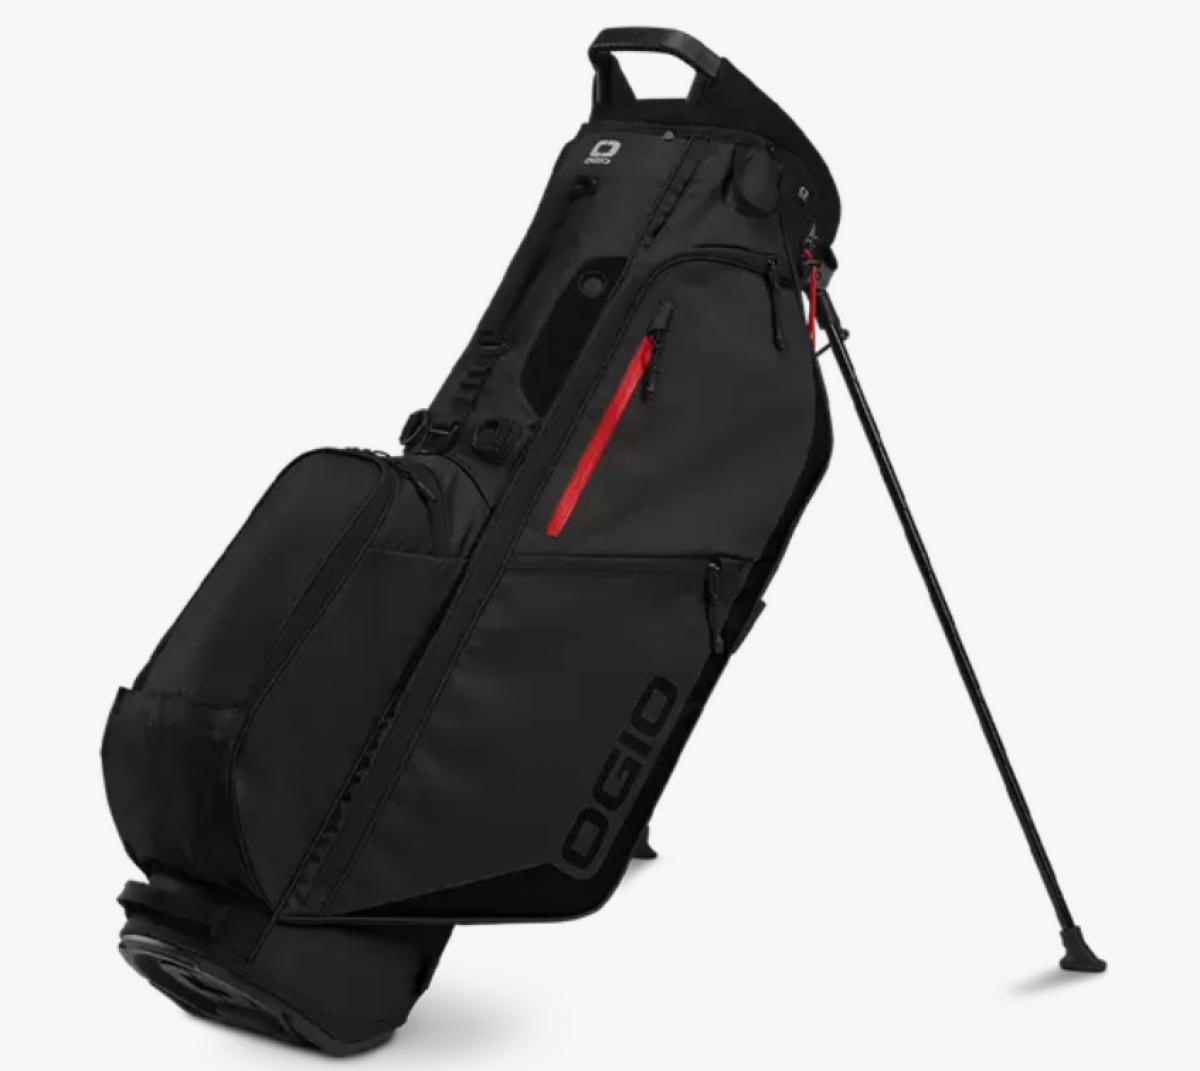 OGIO Fuse Golf Stand Bag 4 Review 